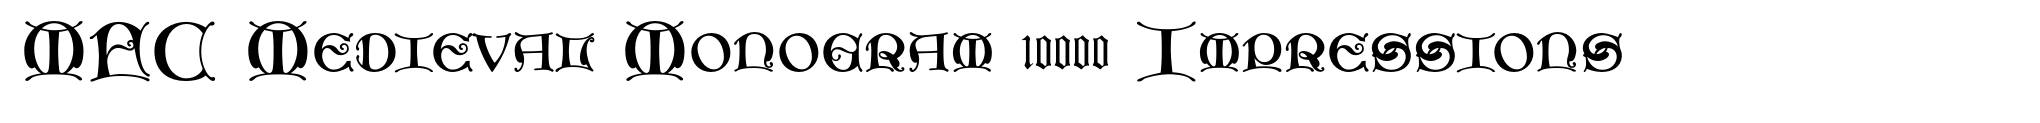 MFC Medieval Monogram 10000 Impressions image